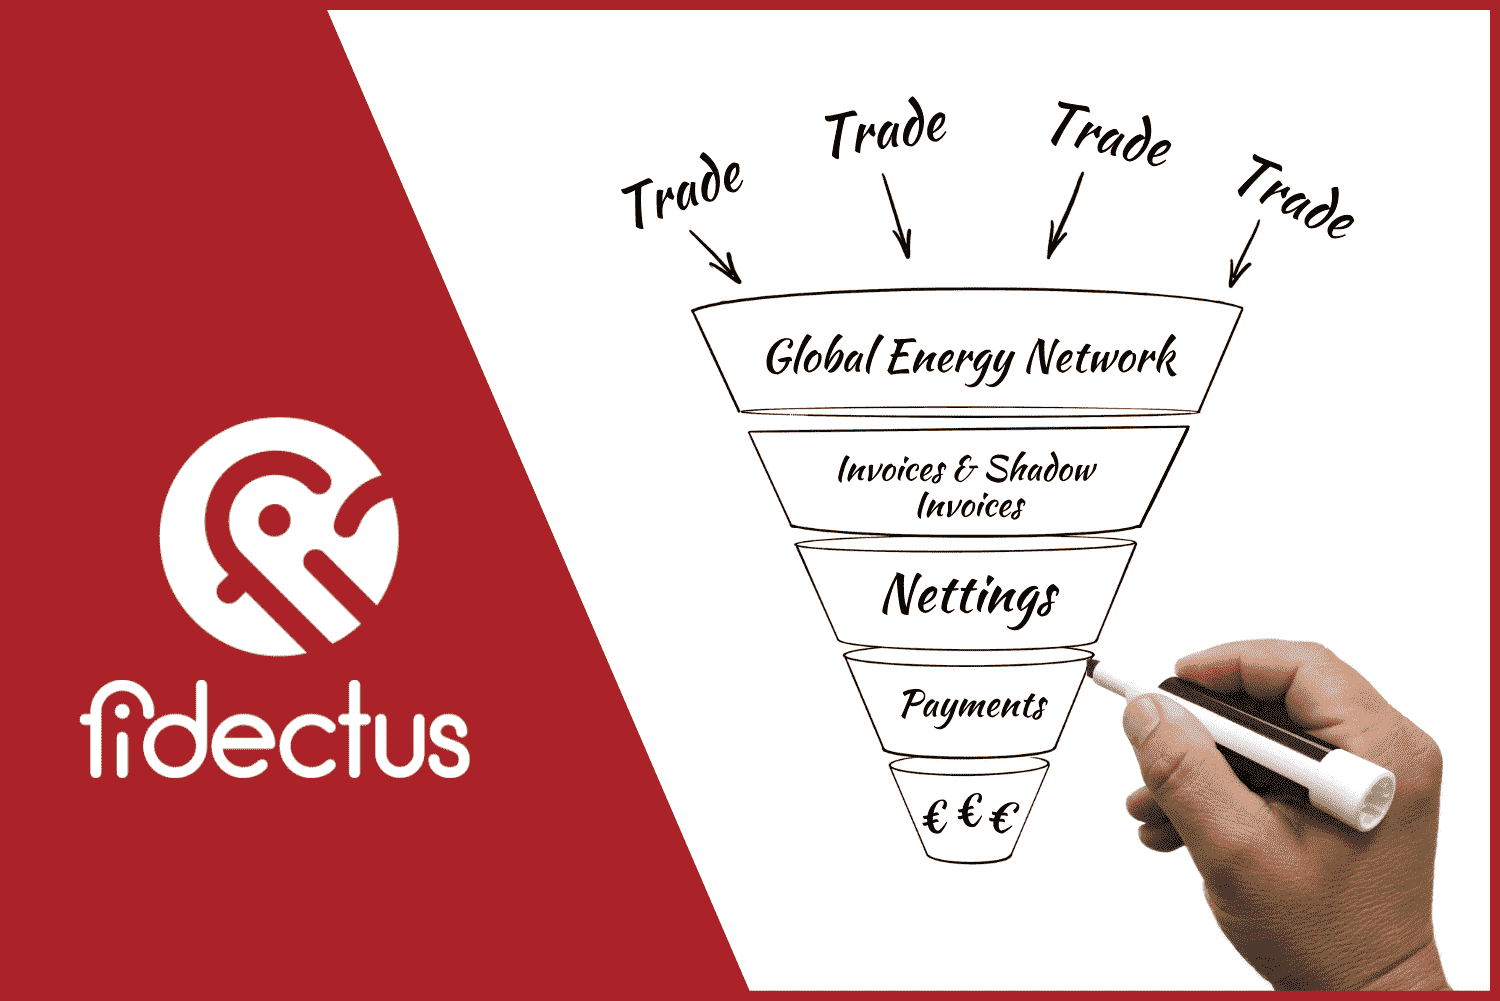 Fidetus' Global Energy Network's settlement, netting, and trade finance capabilities